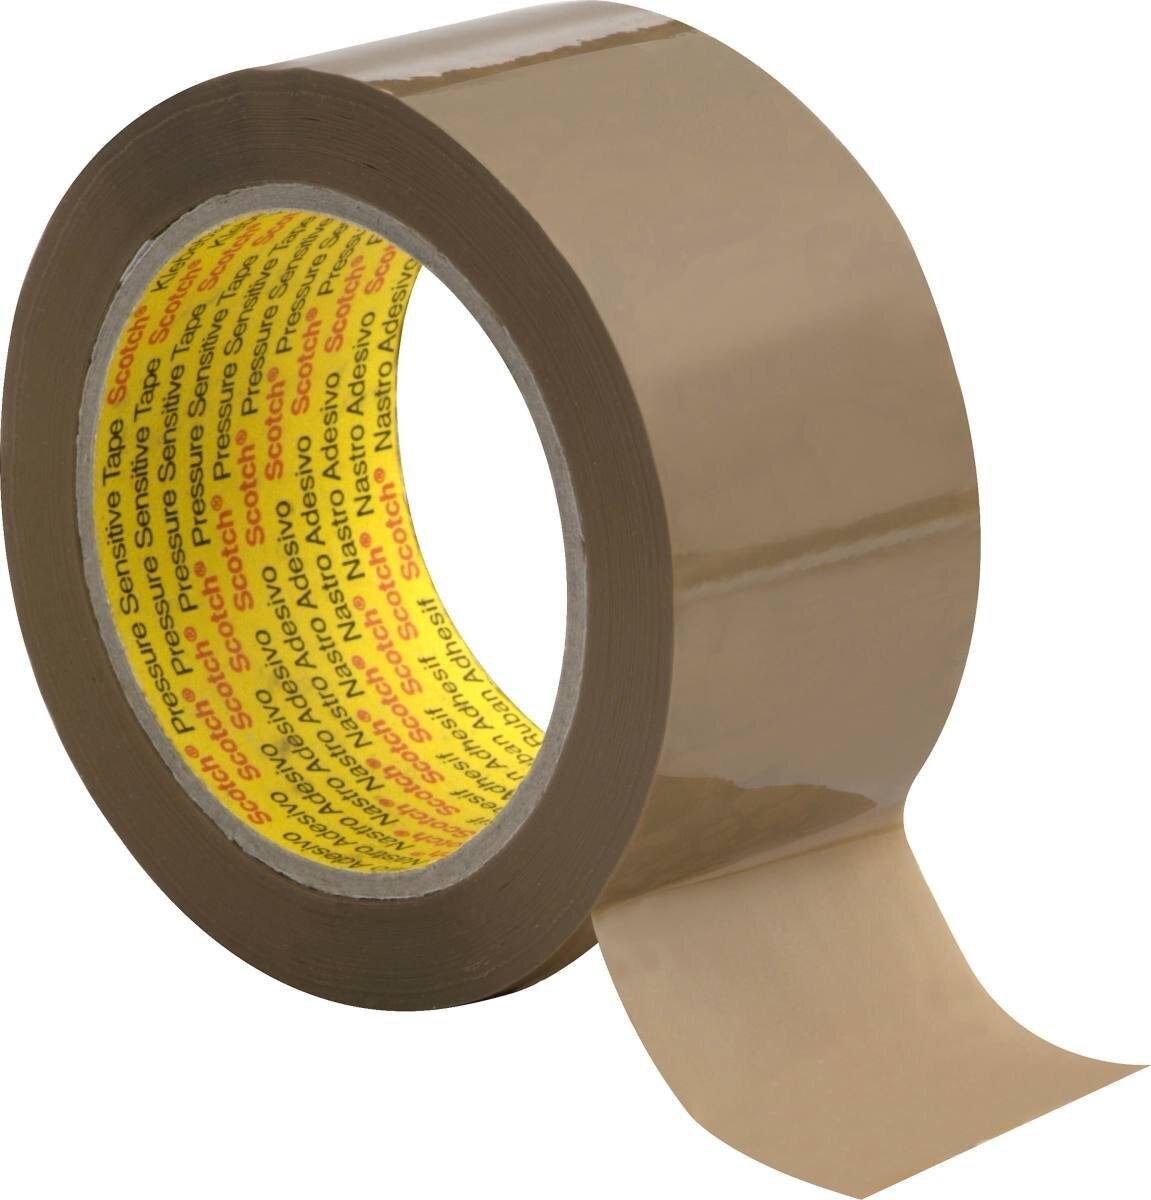 3M Scotch packaging tape 3739, brown, 50 mm x 66 m, 0.056 mm